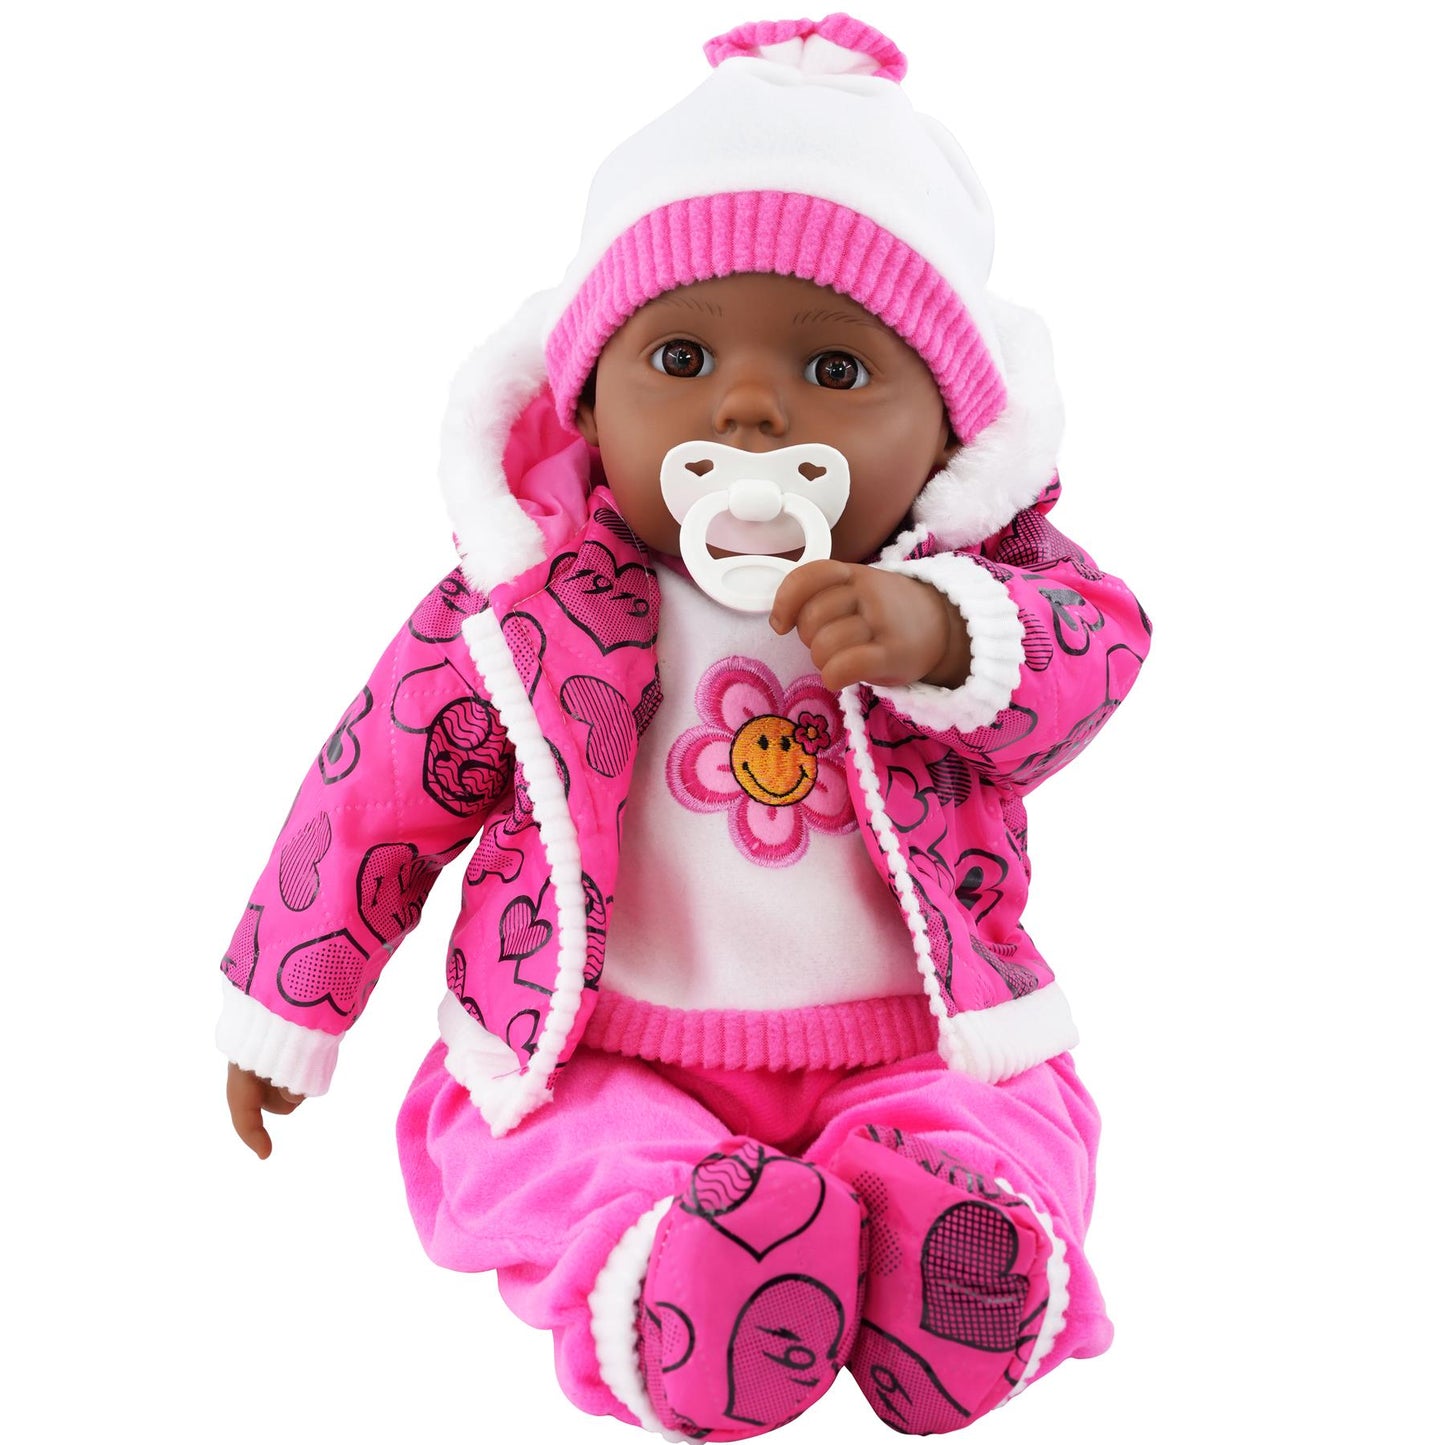 BiBi Black Baby Doll "Sparkle" (50 cm / 20") by BiBi Doll - UKBuyZone